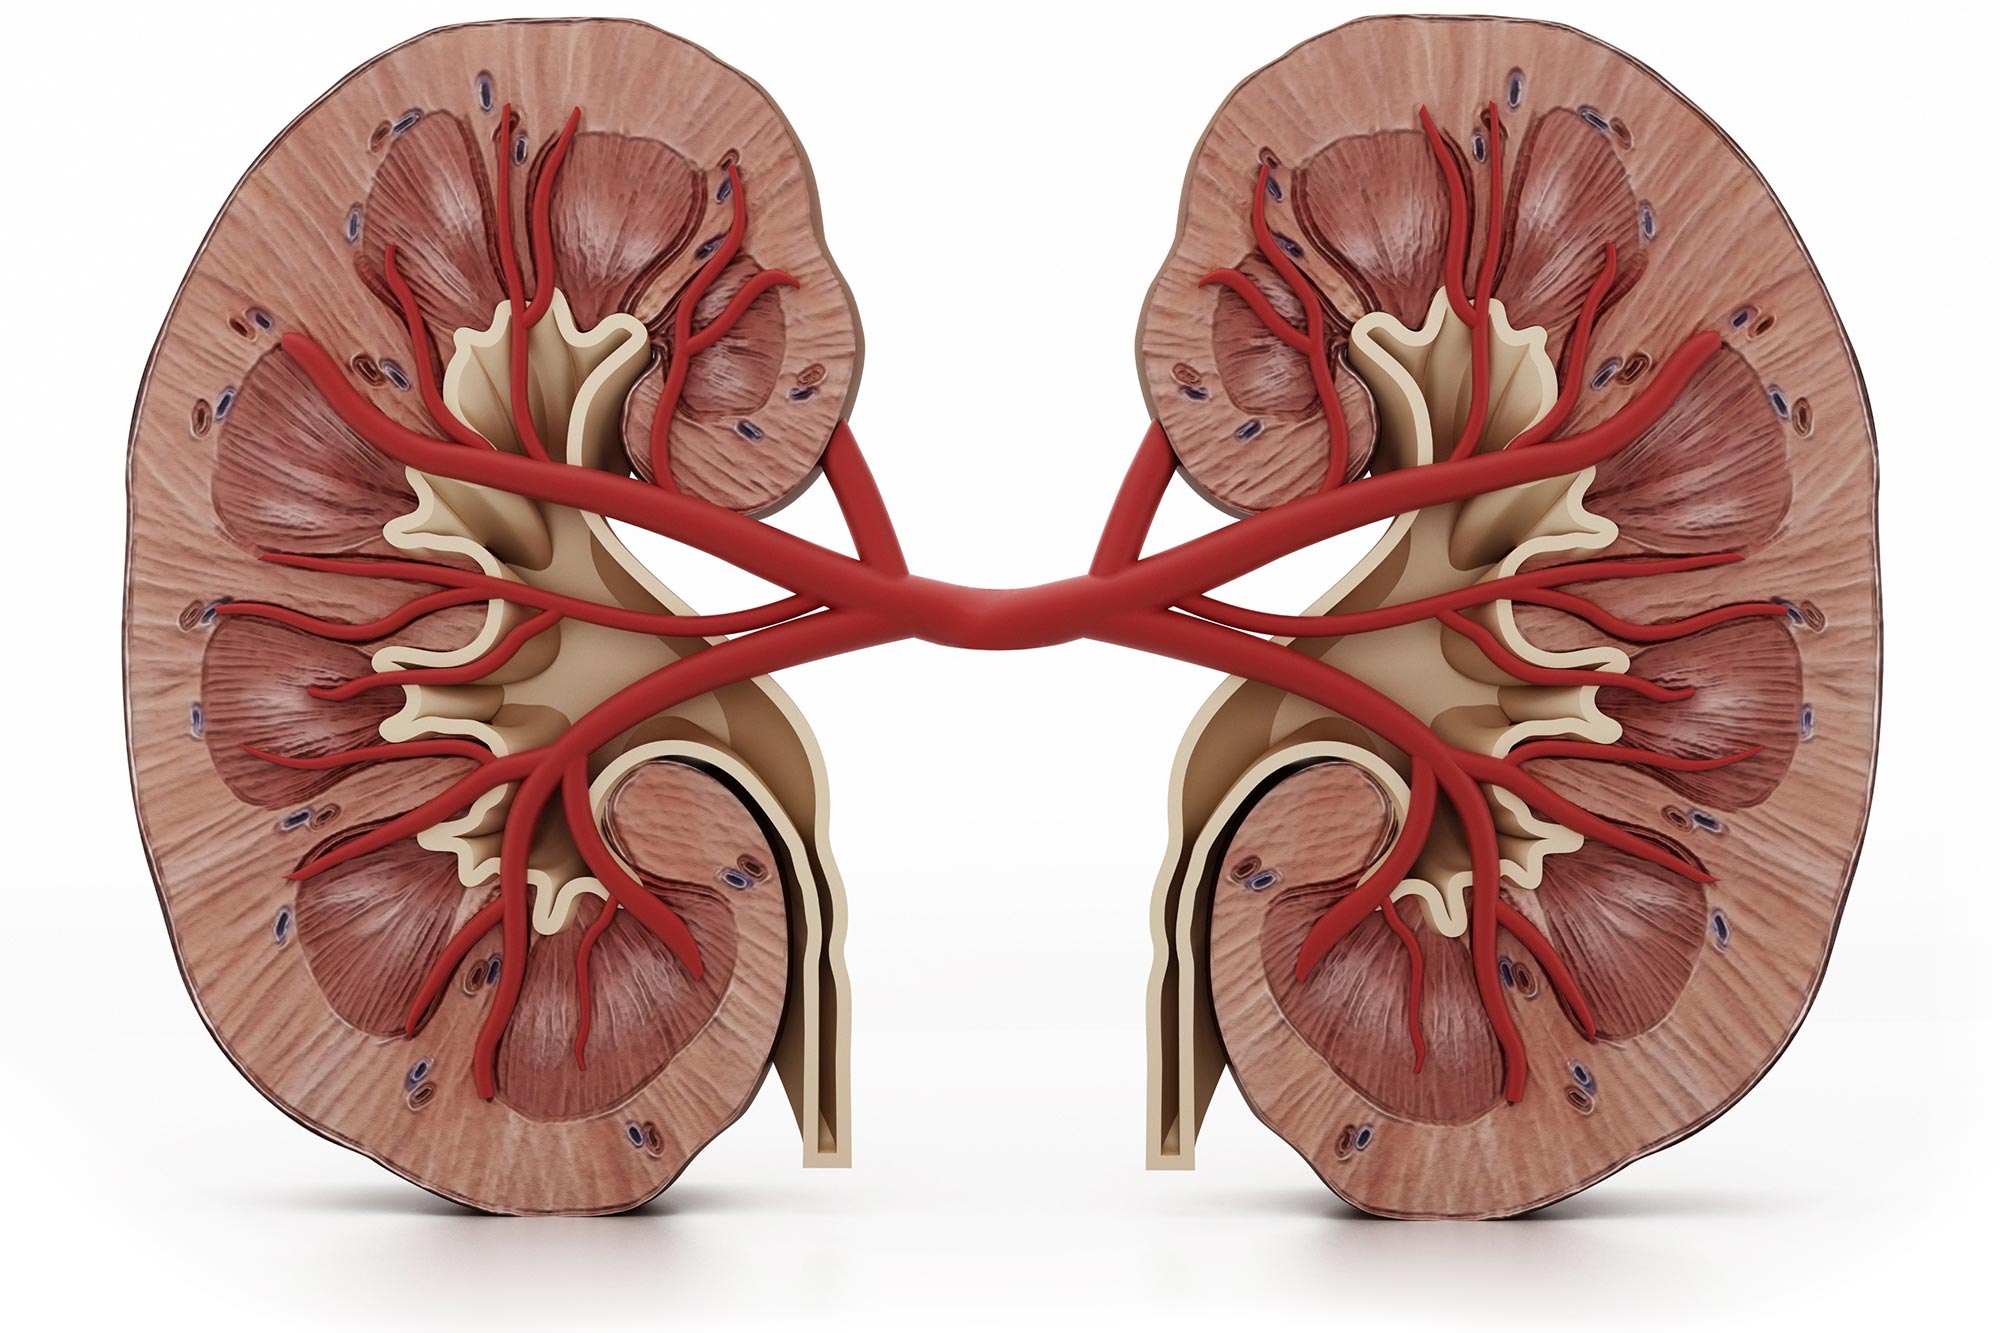 Illustration of human kidney